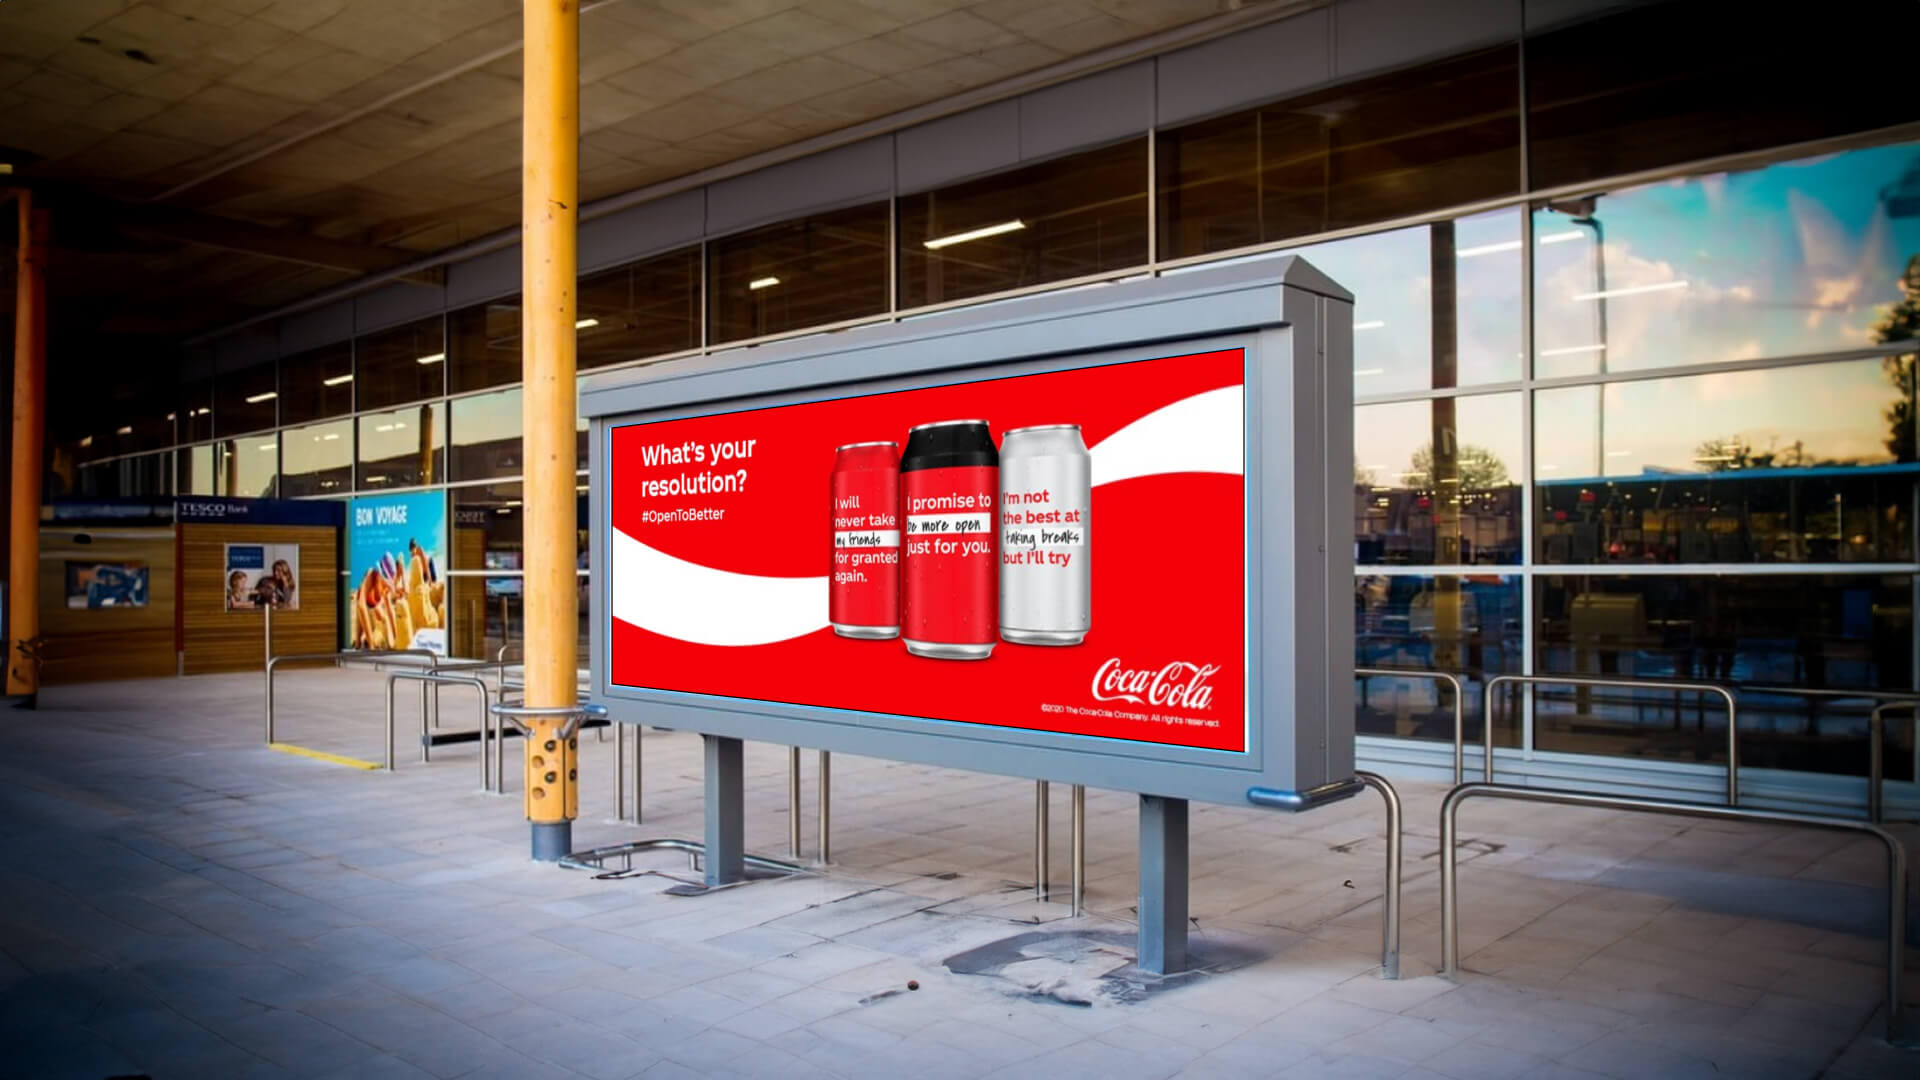 A digital footpath screen showing Coca Cola's brand slogans.